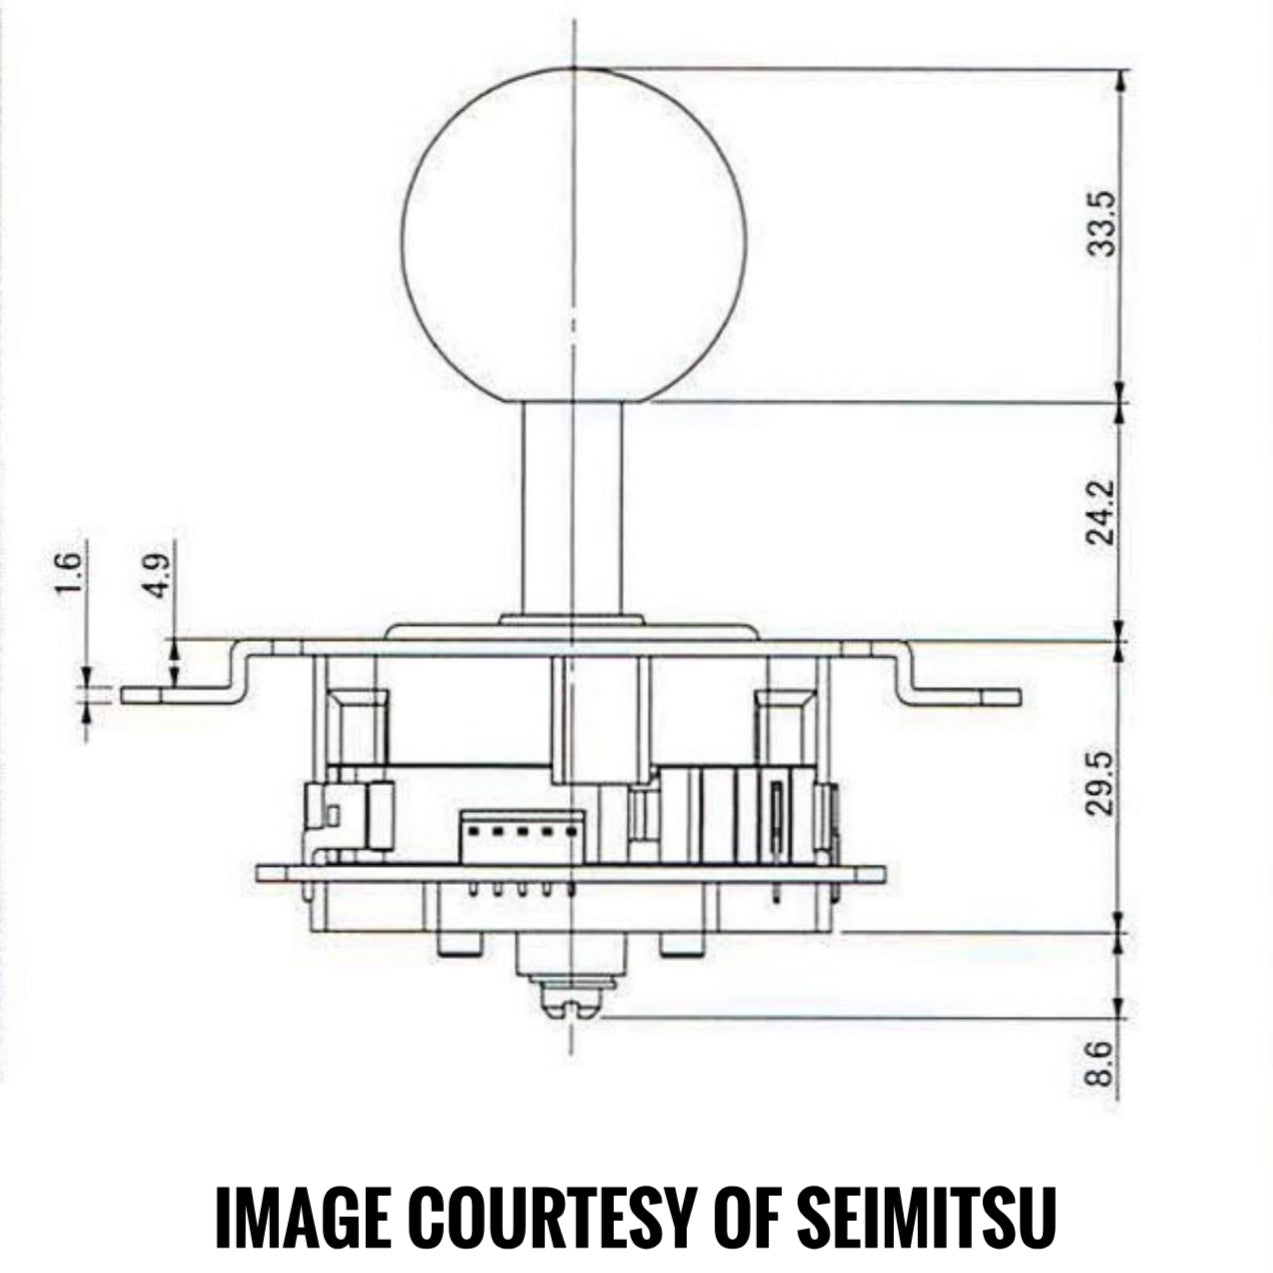 Seimitsu LS-62-01 (compact) joystick